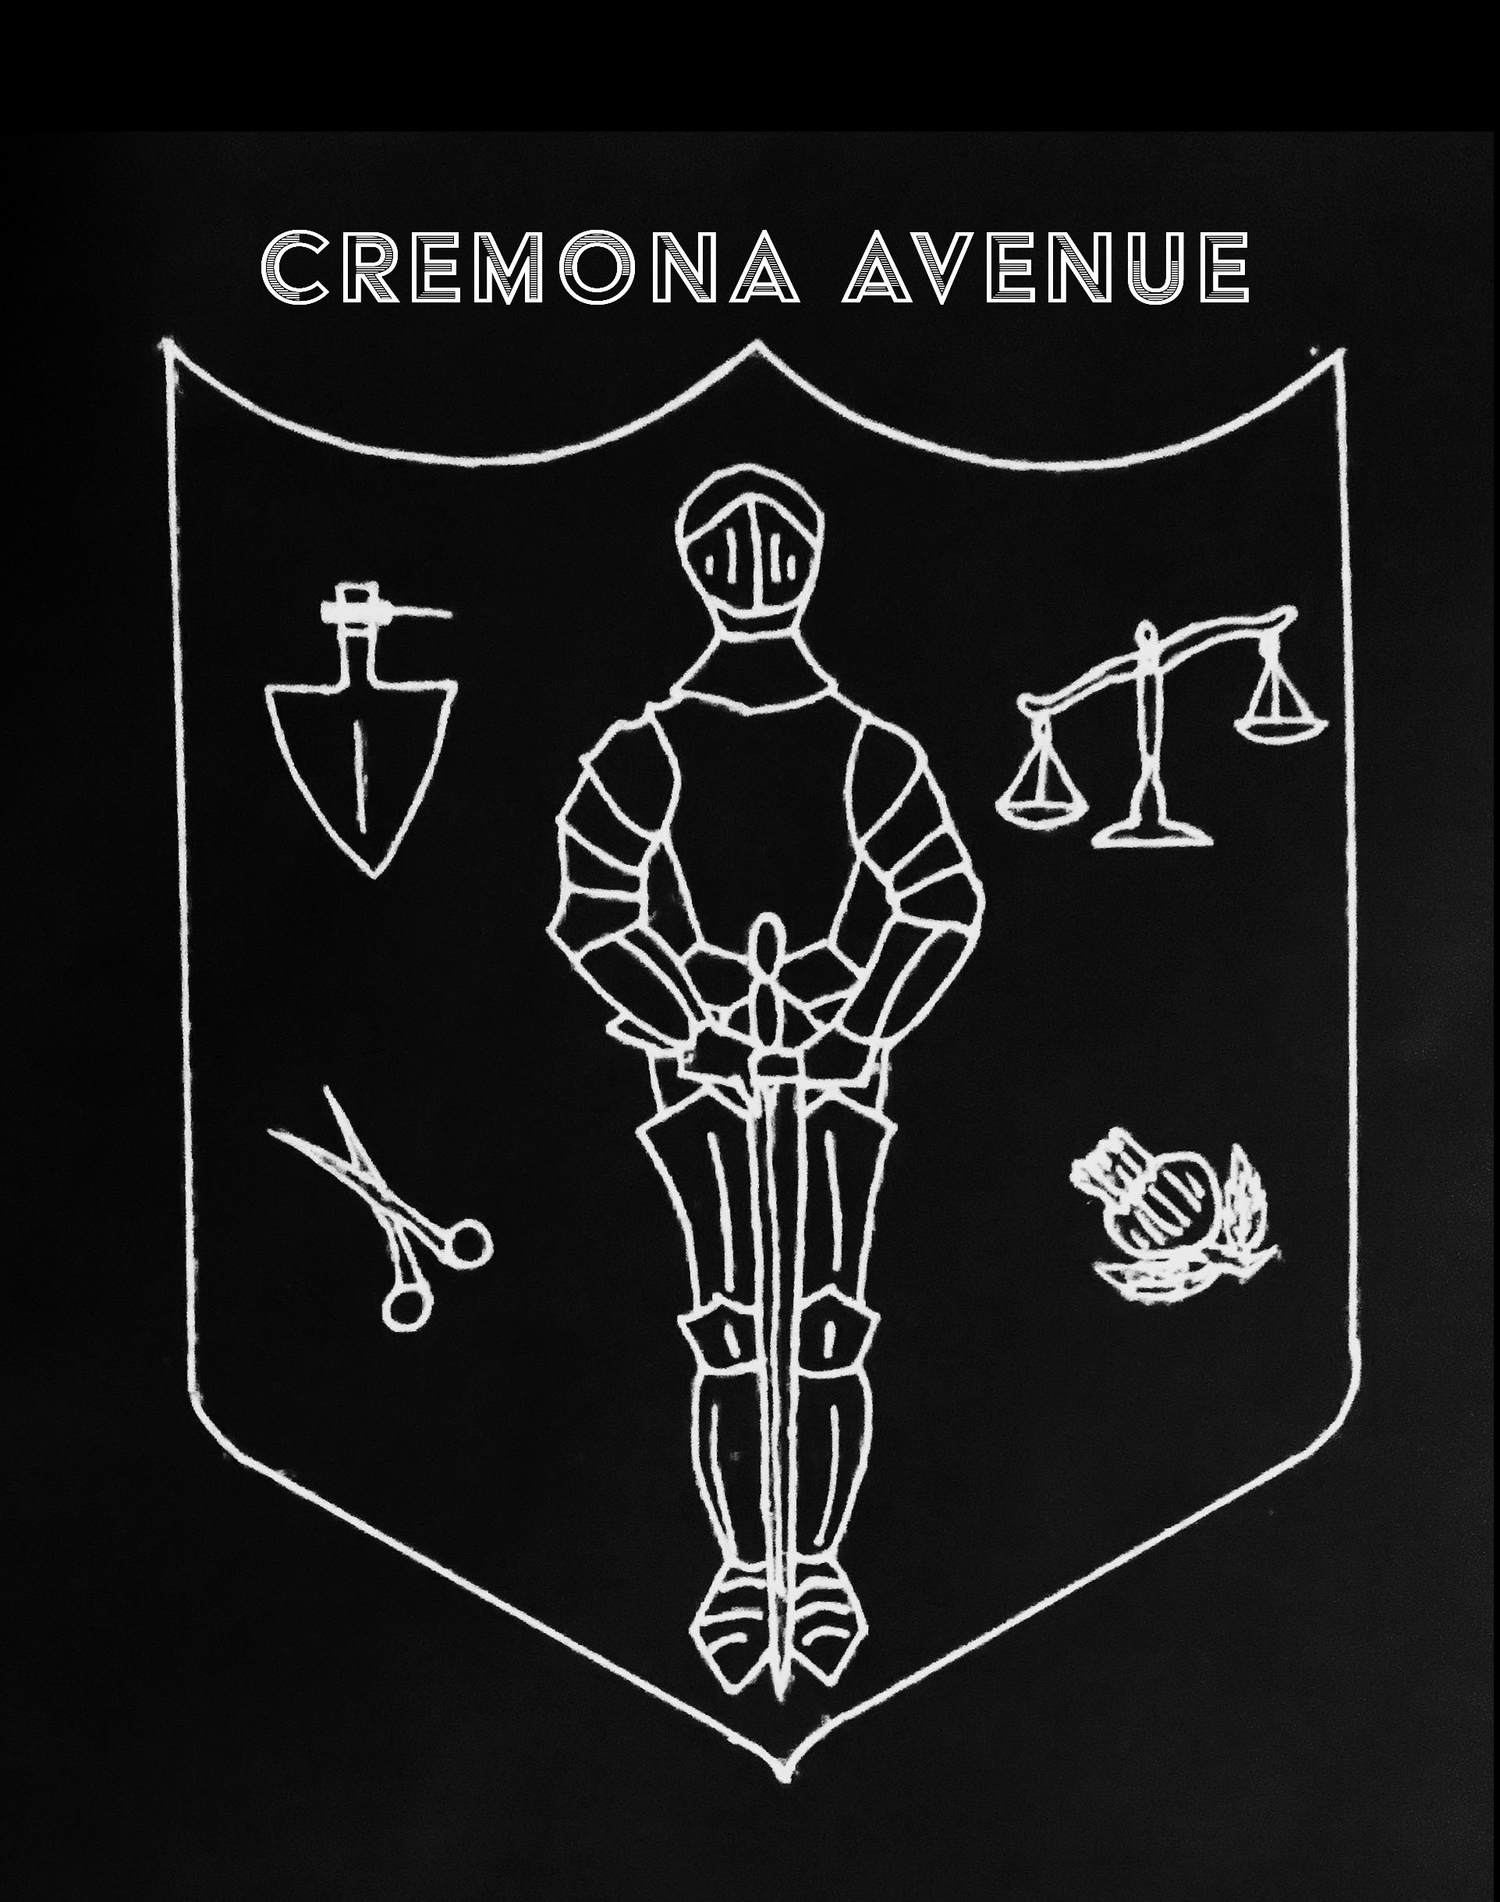 Cremona Avenue